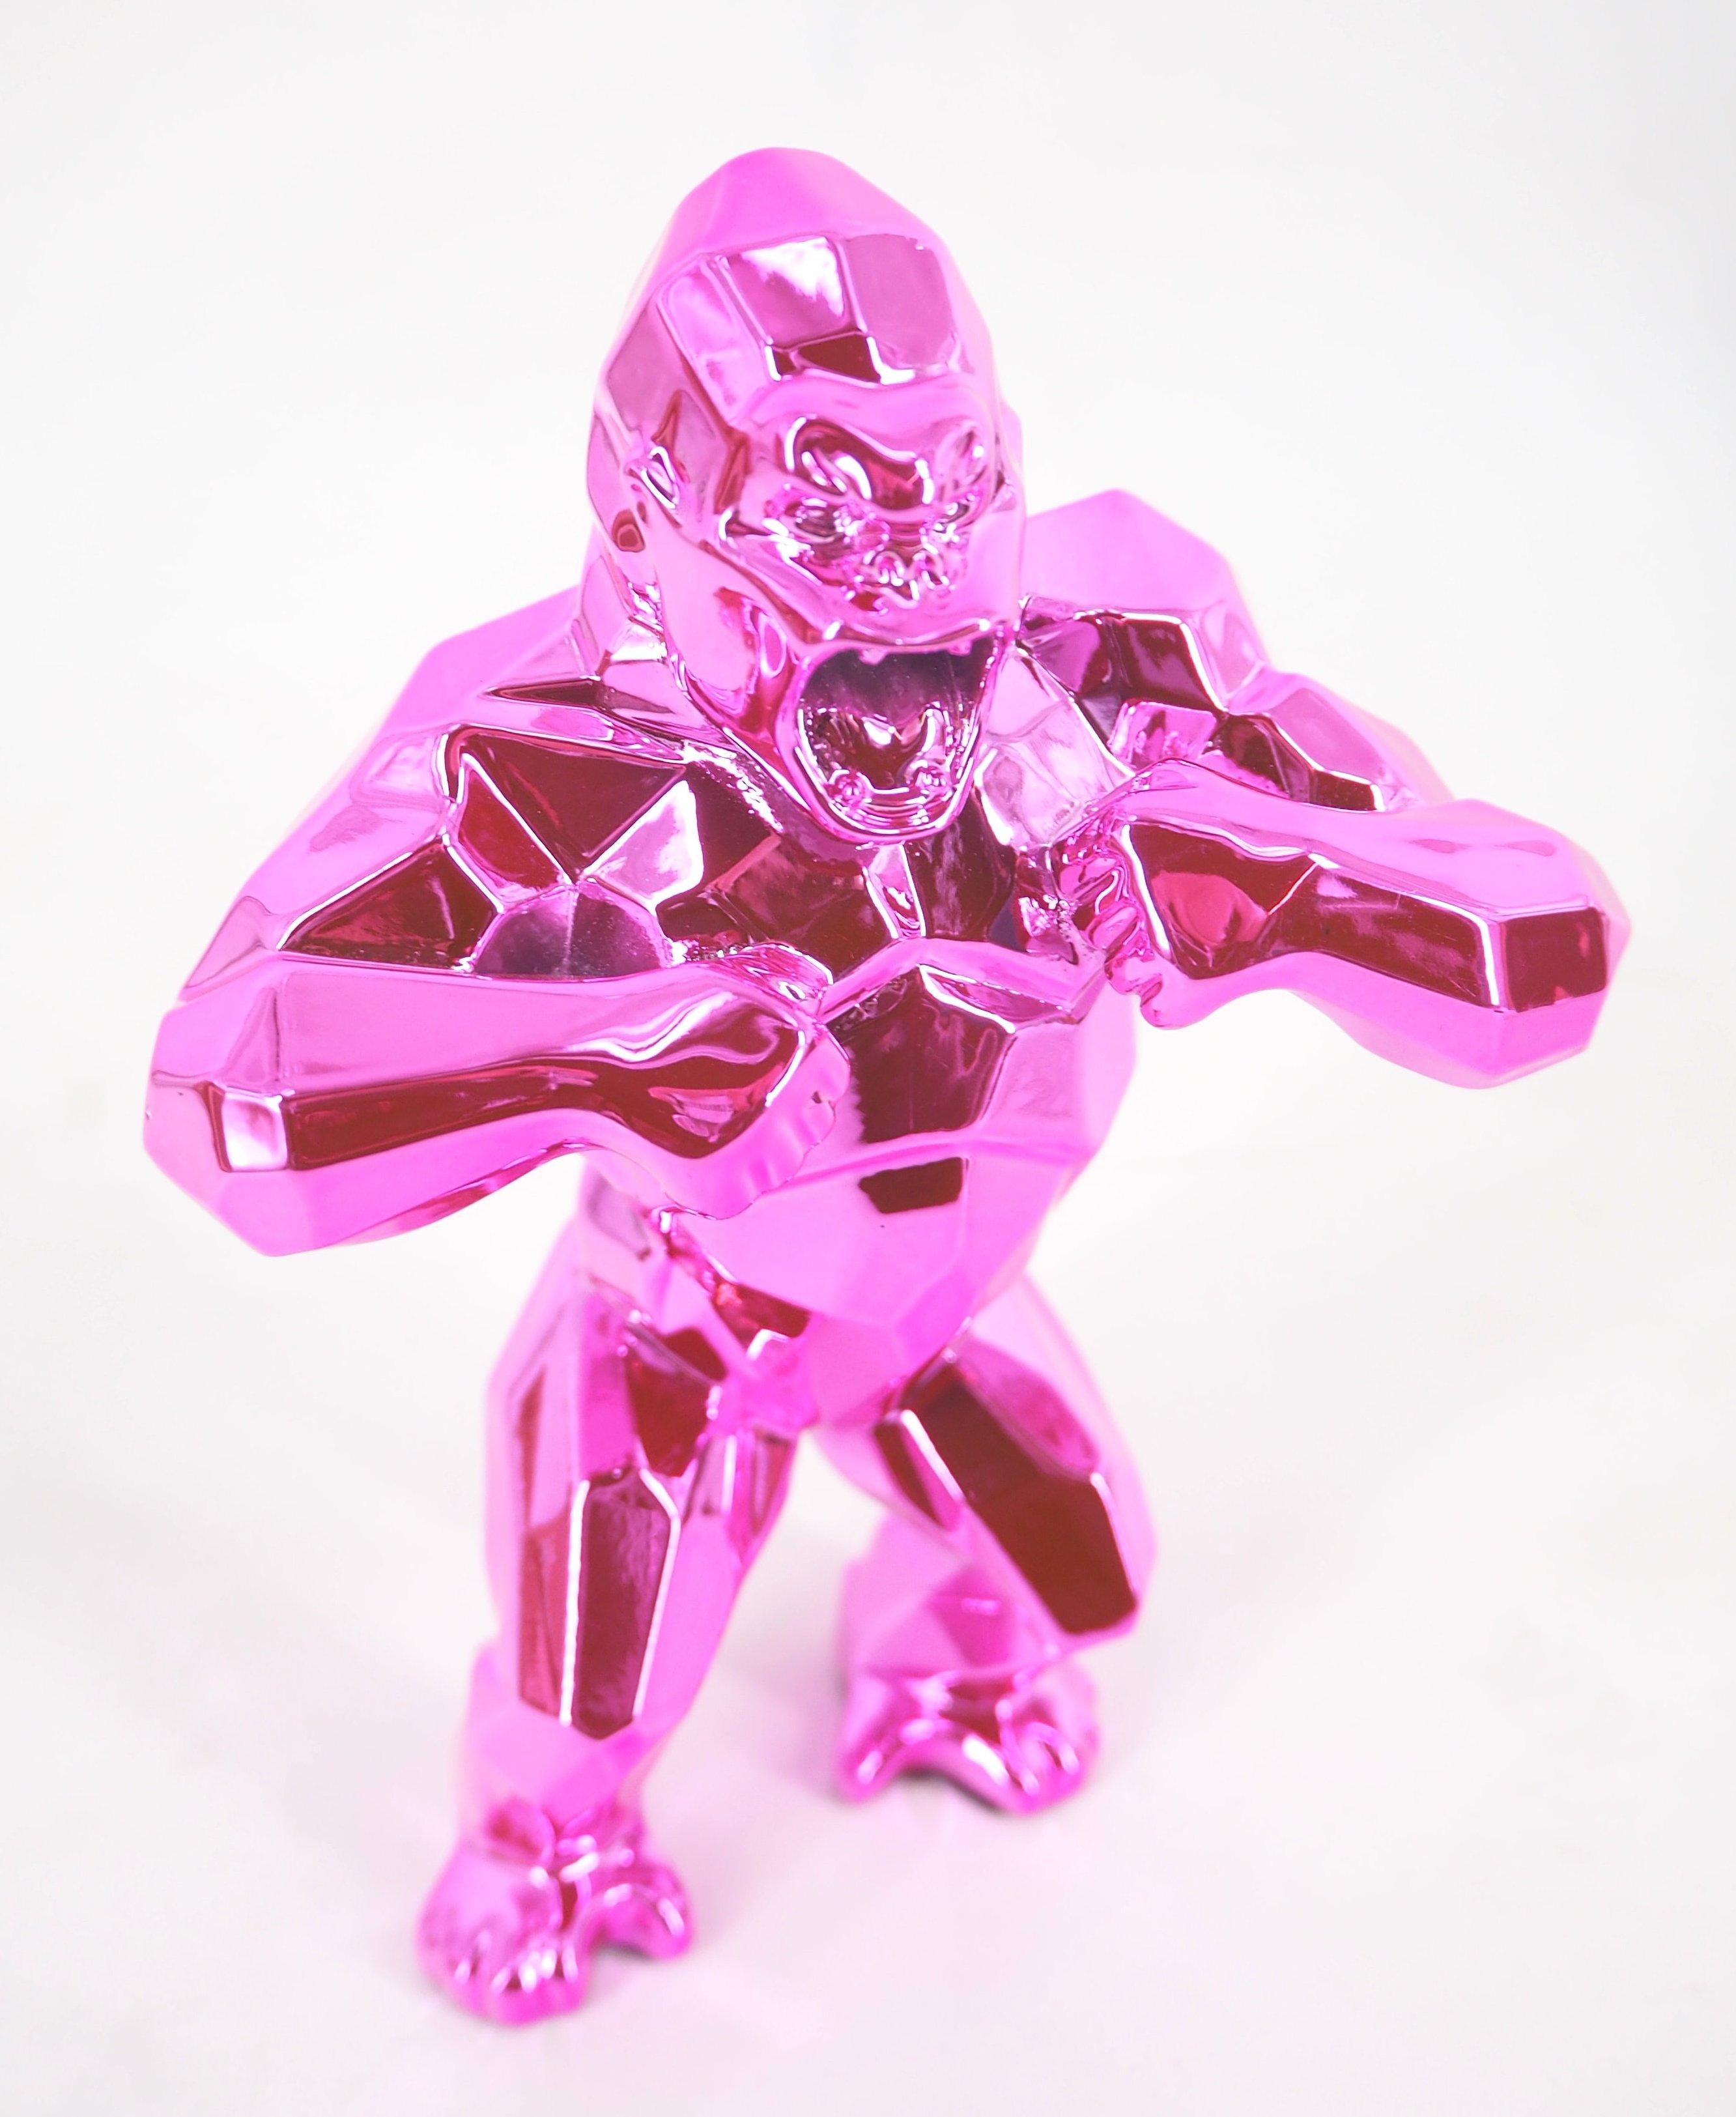 Kong Spirit (Pink edition) - Sculpture in original box with artist certificate